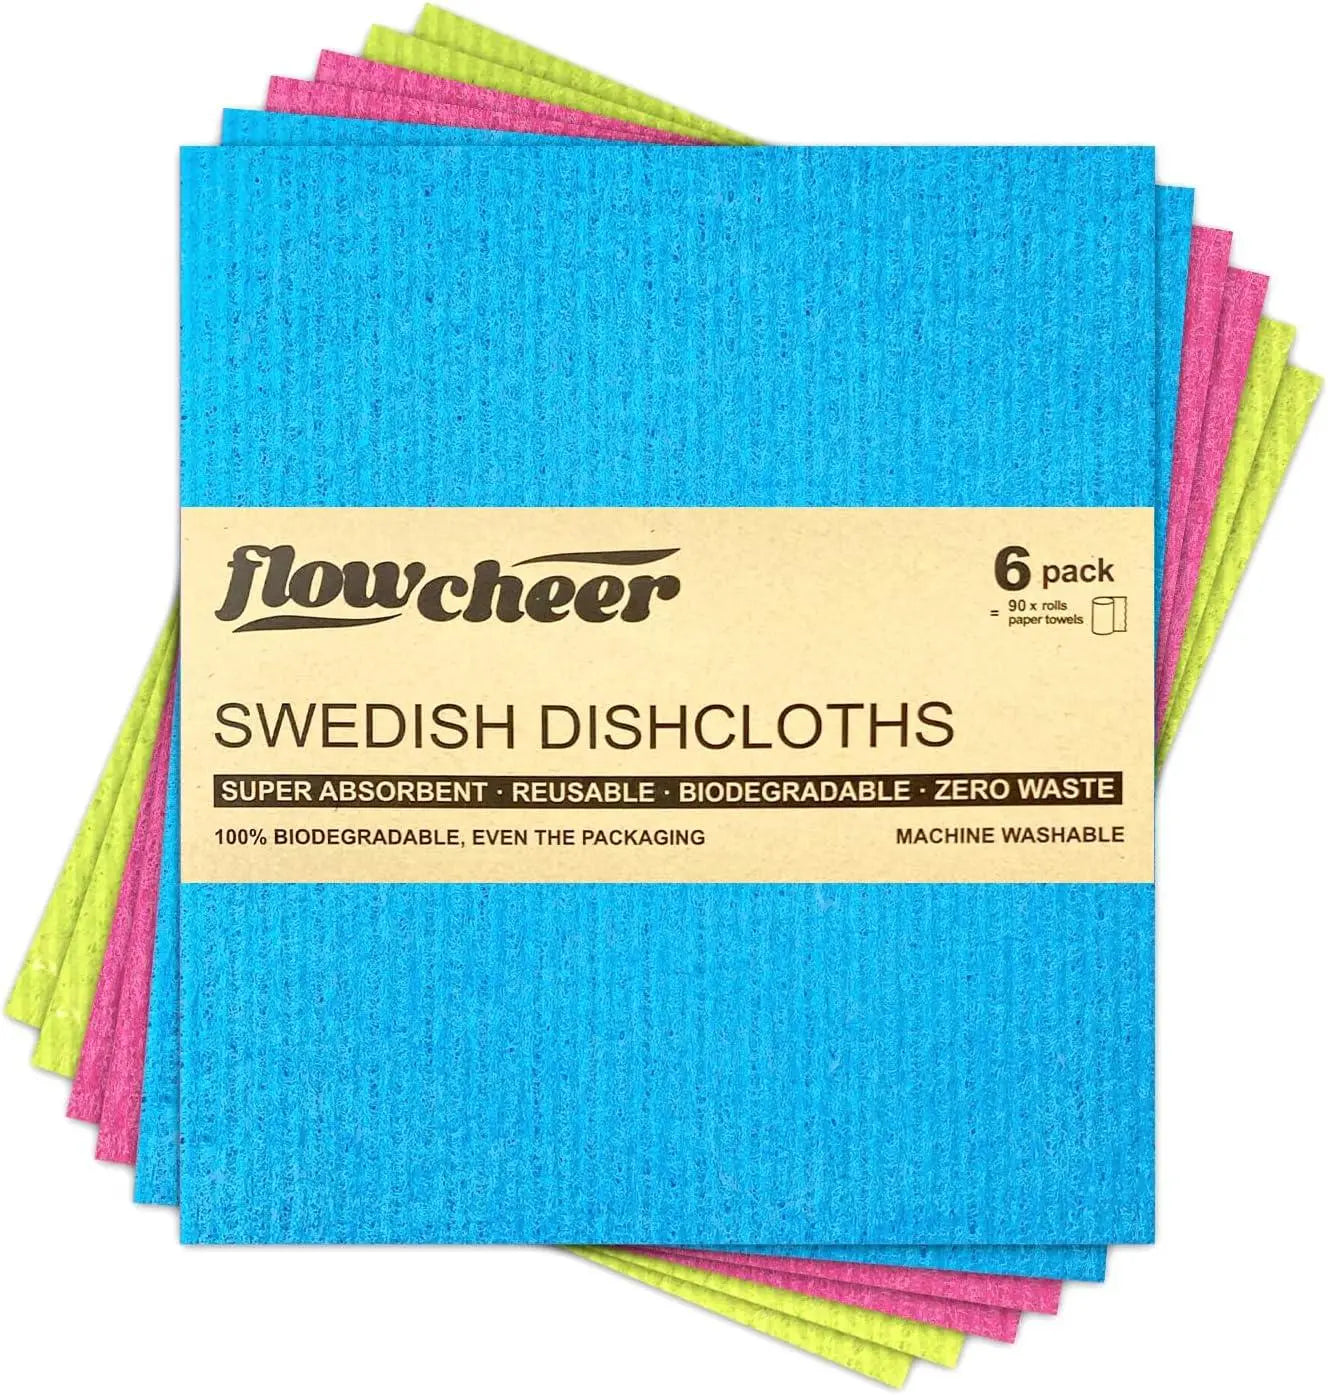 Swedish Wholesale Swedish Dish Cloths for Kitchen- 10 Pack